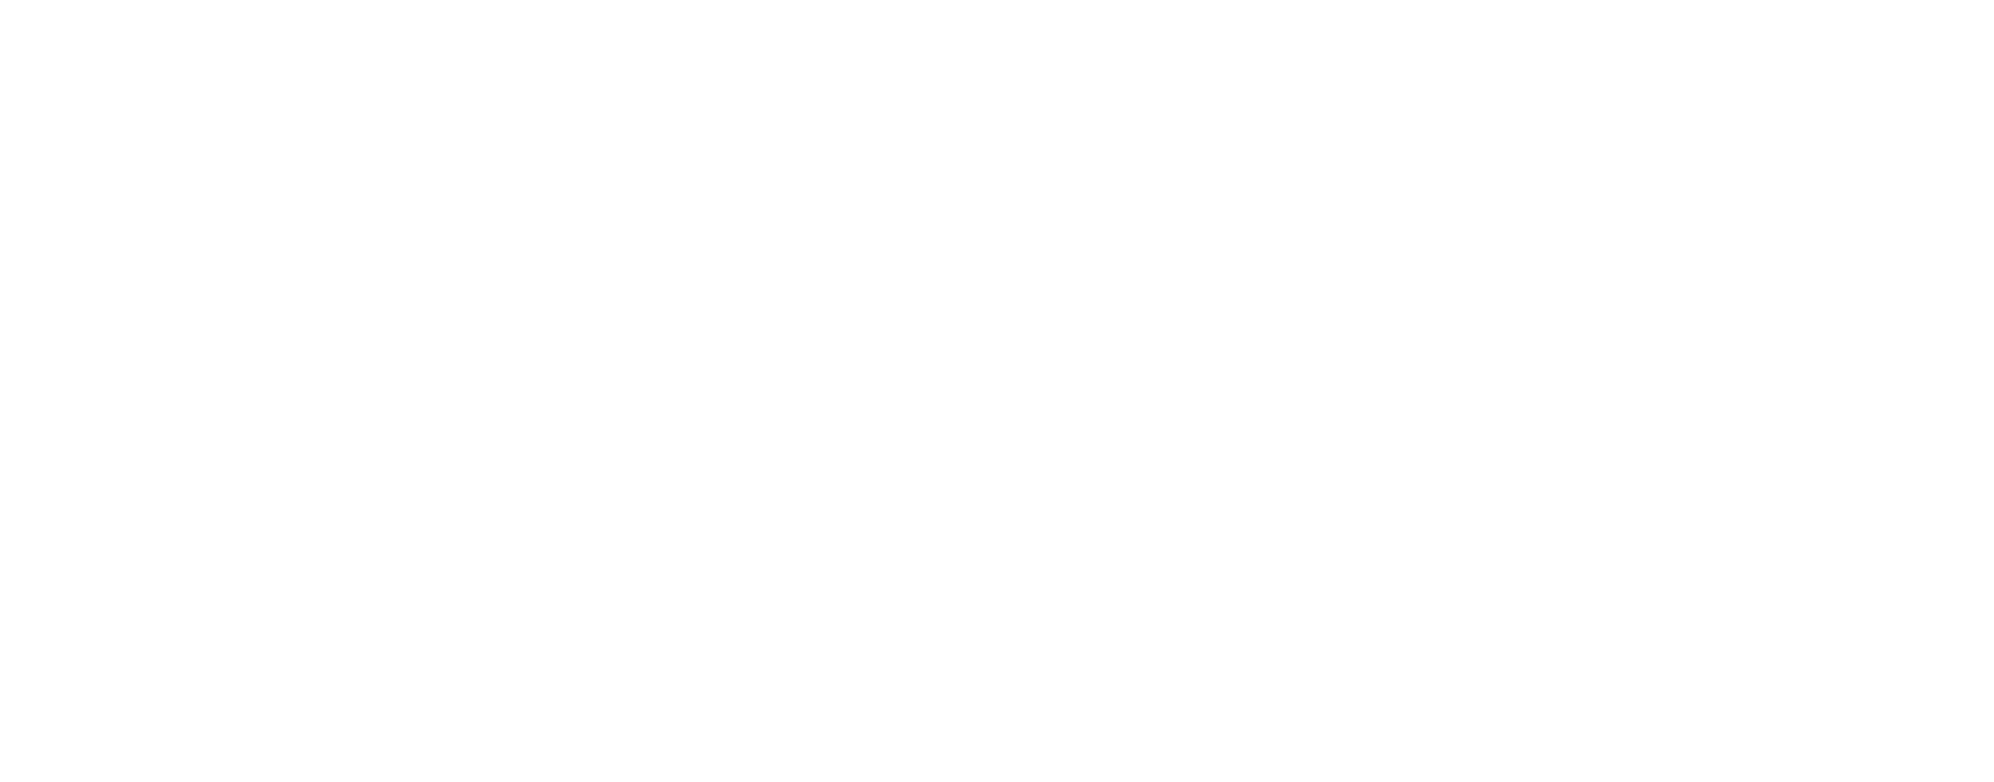 OpenFF Toolkit 0.11.1+1.g2294da96.dirty documentation logo